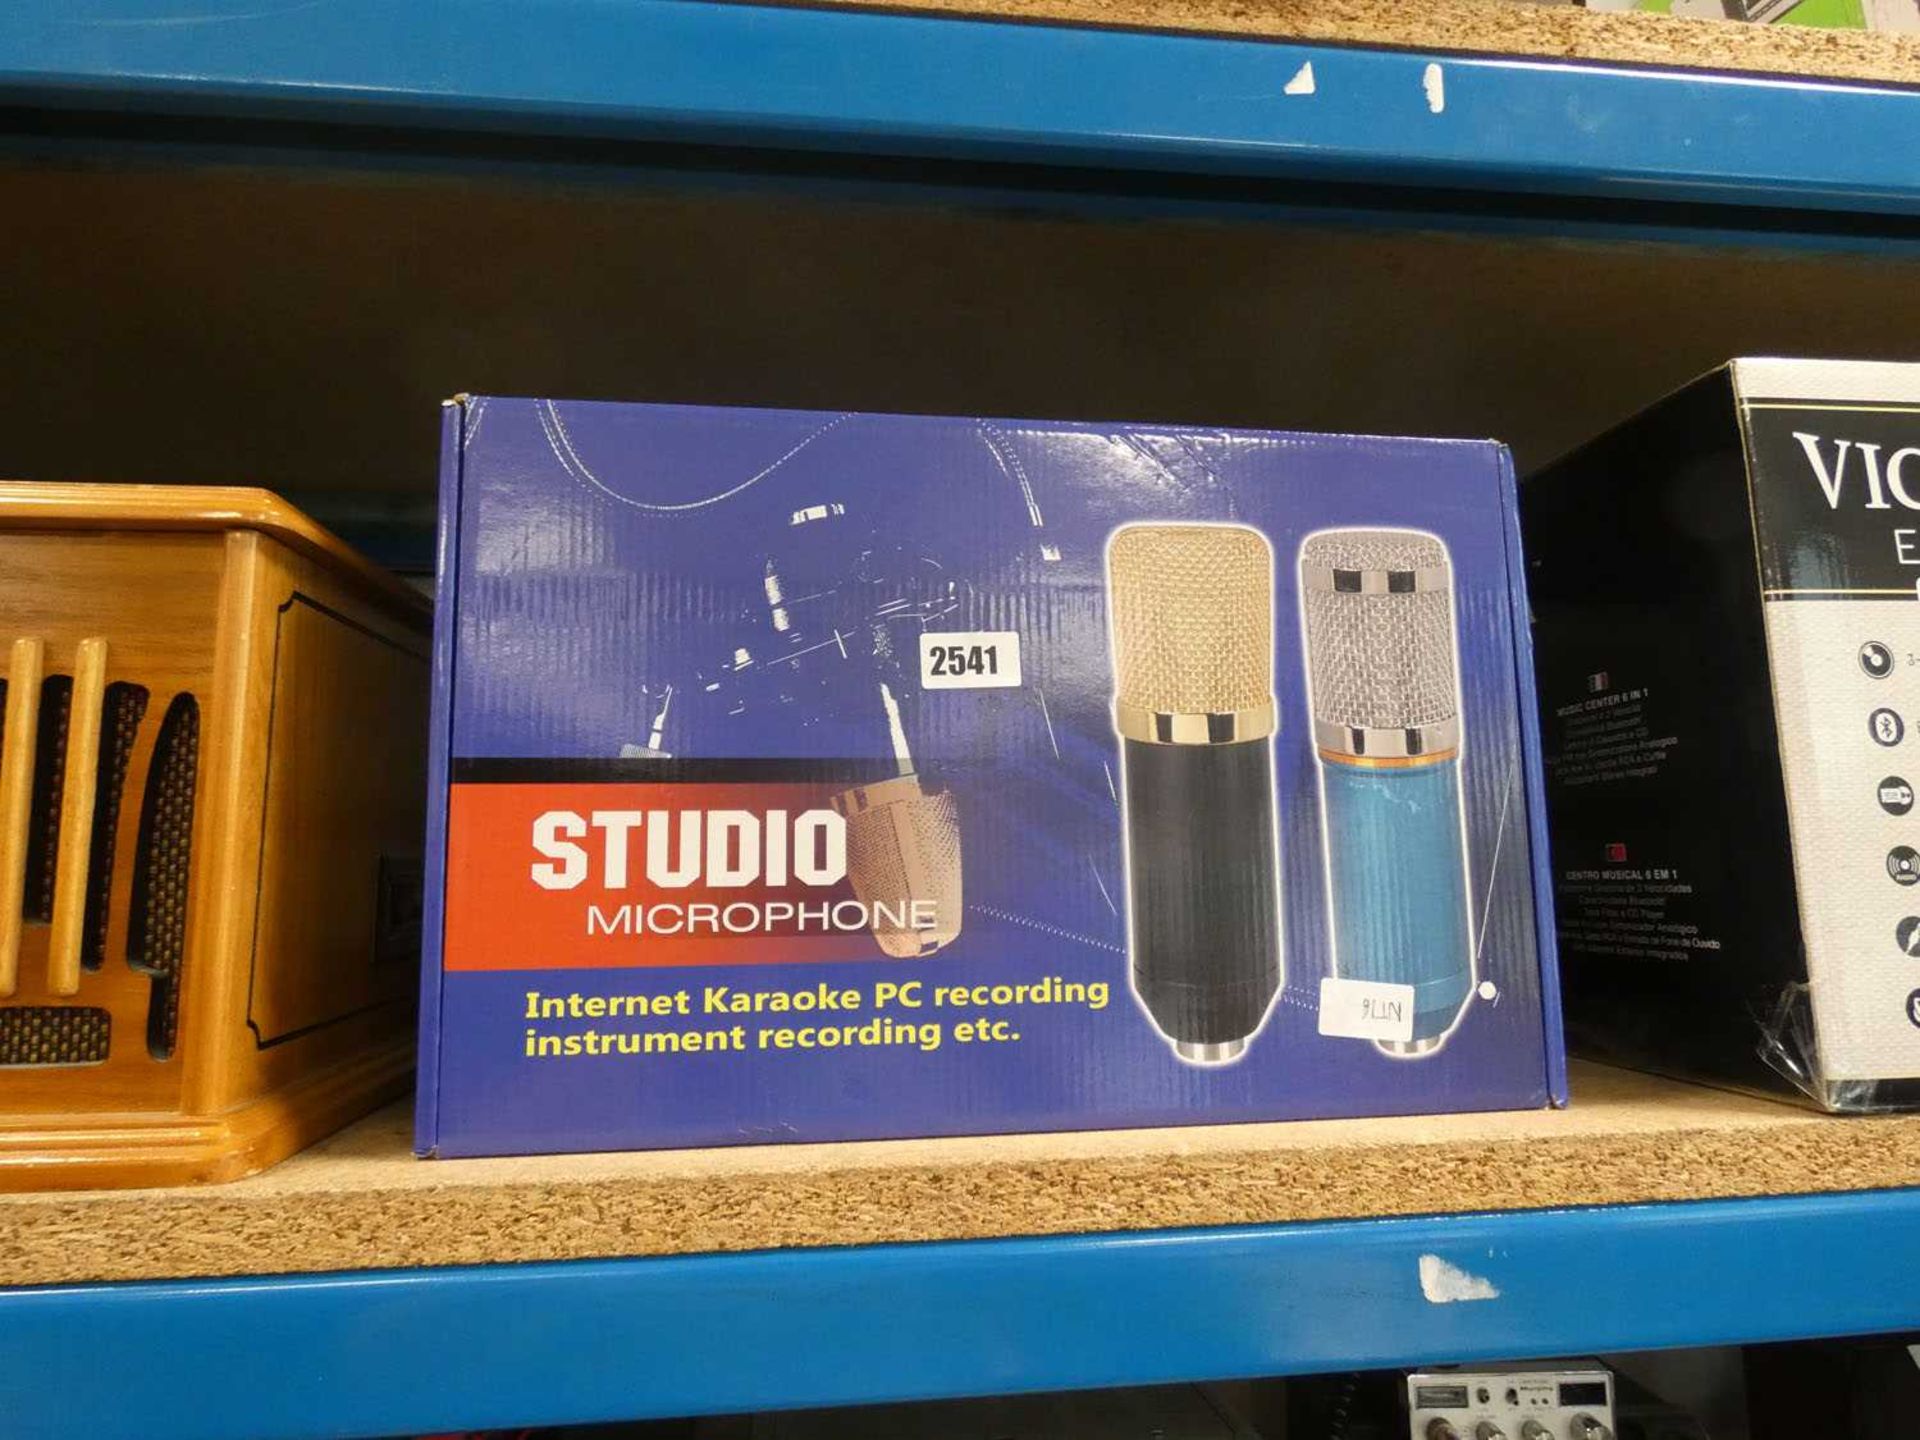 Studio microphone in box